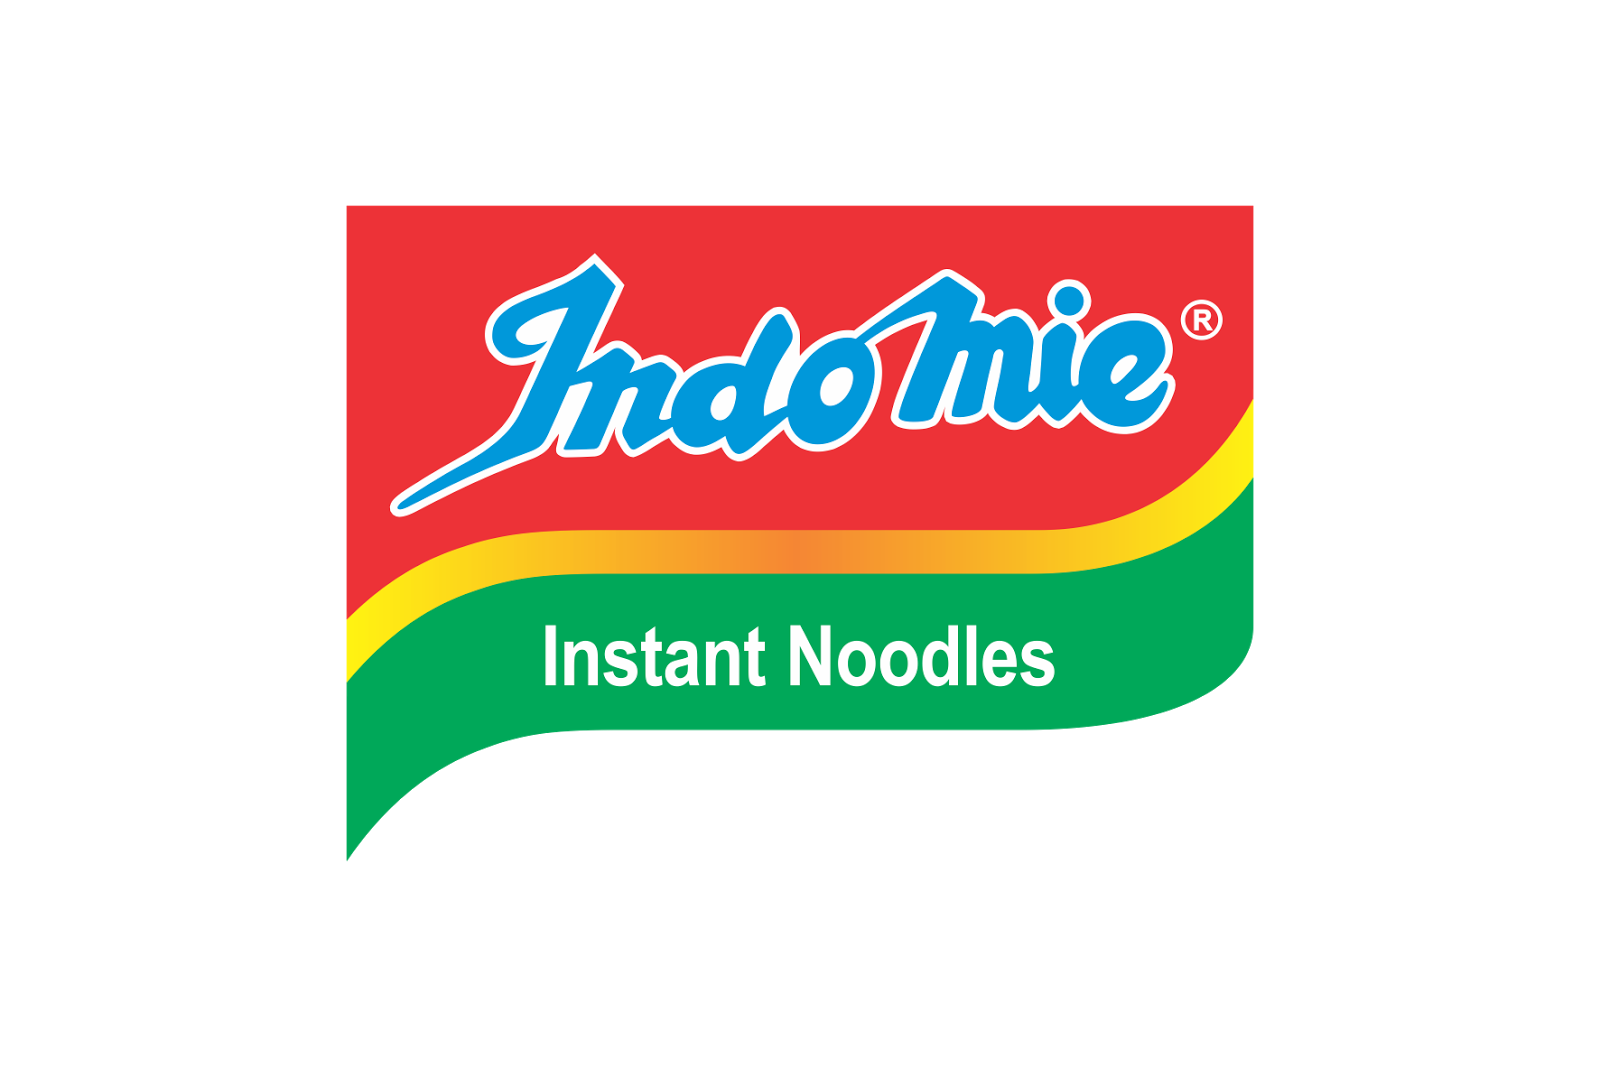 Instan. Indomie. Indomie Noodle. Mie лого. Лапша лого.